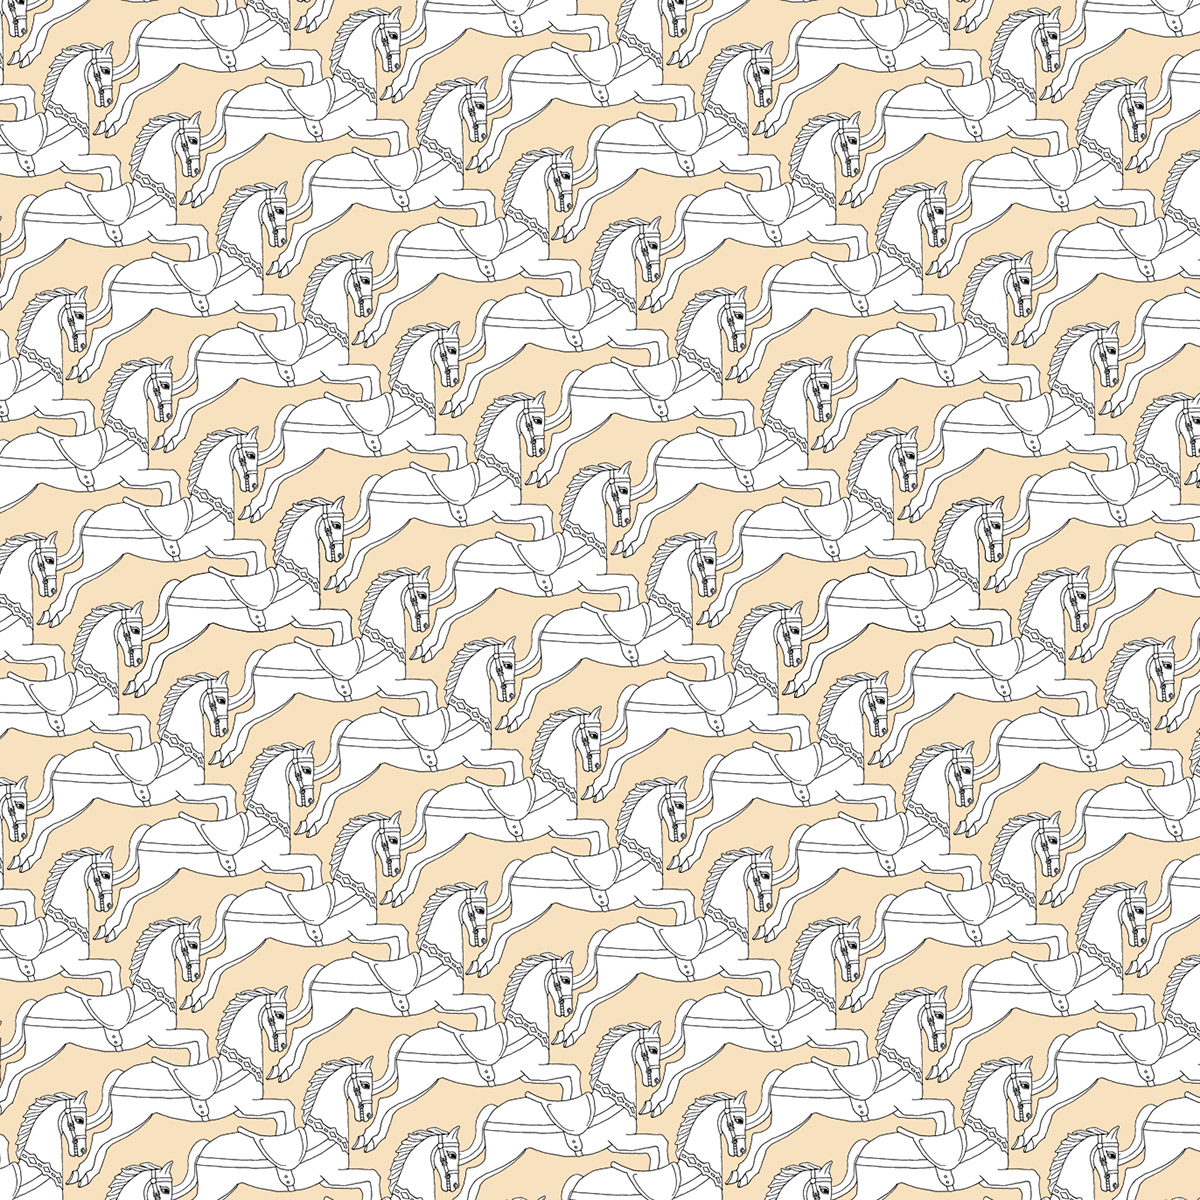 carousel merrygoround horse pattern